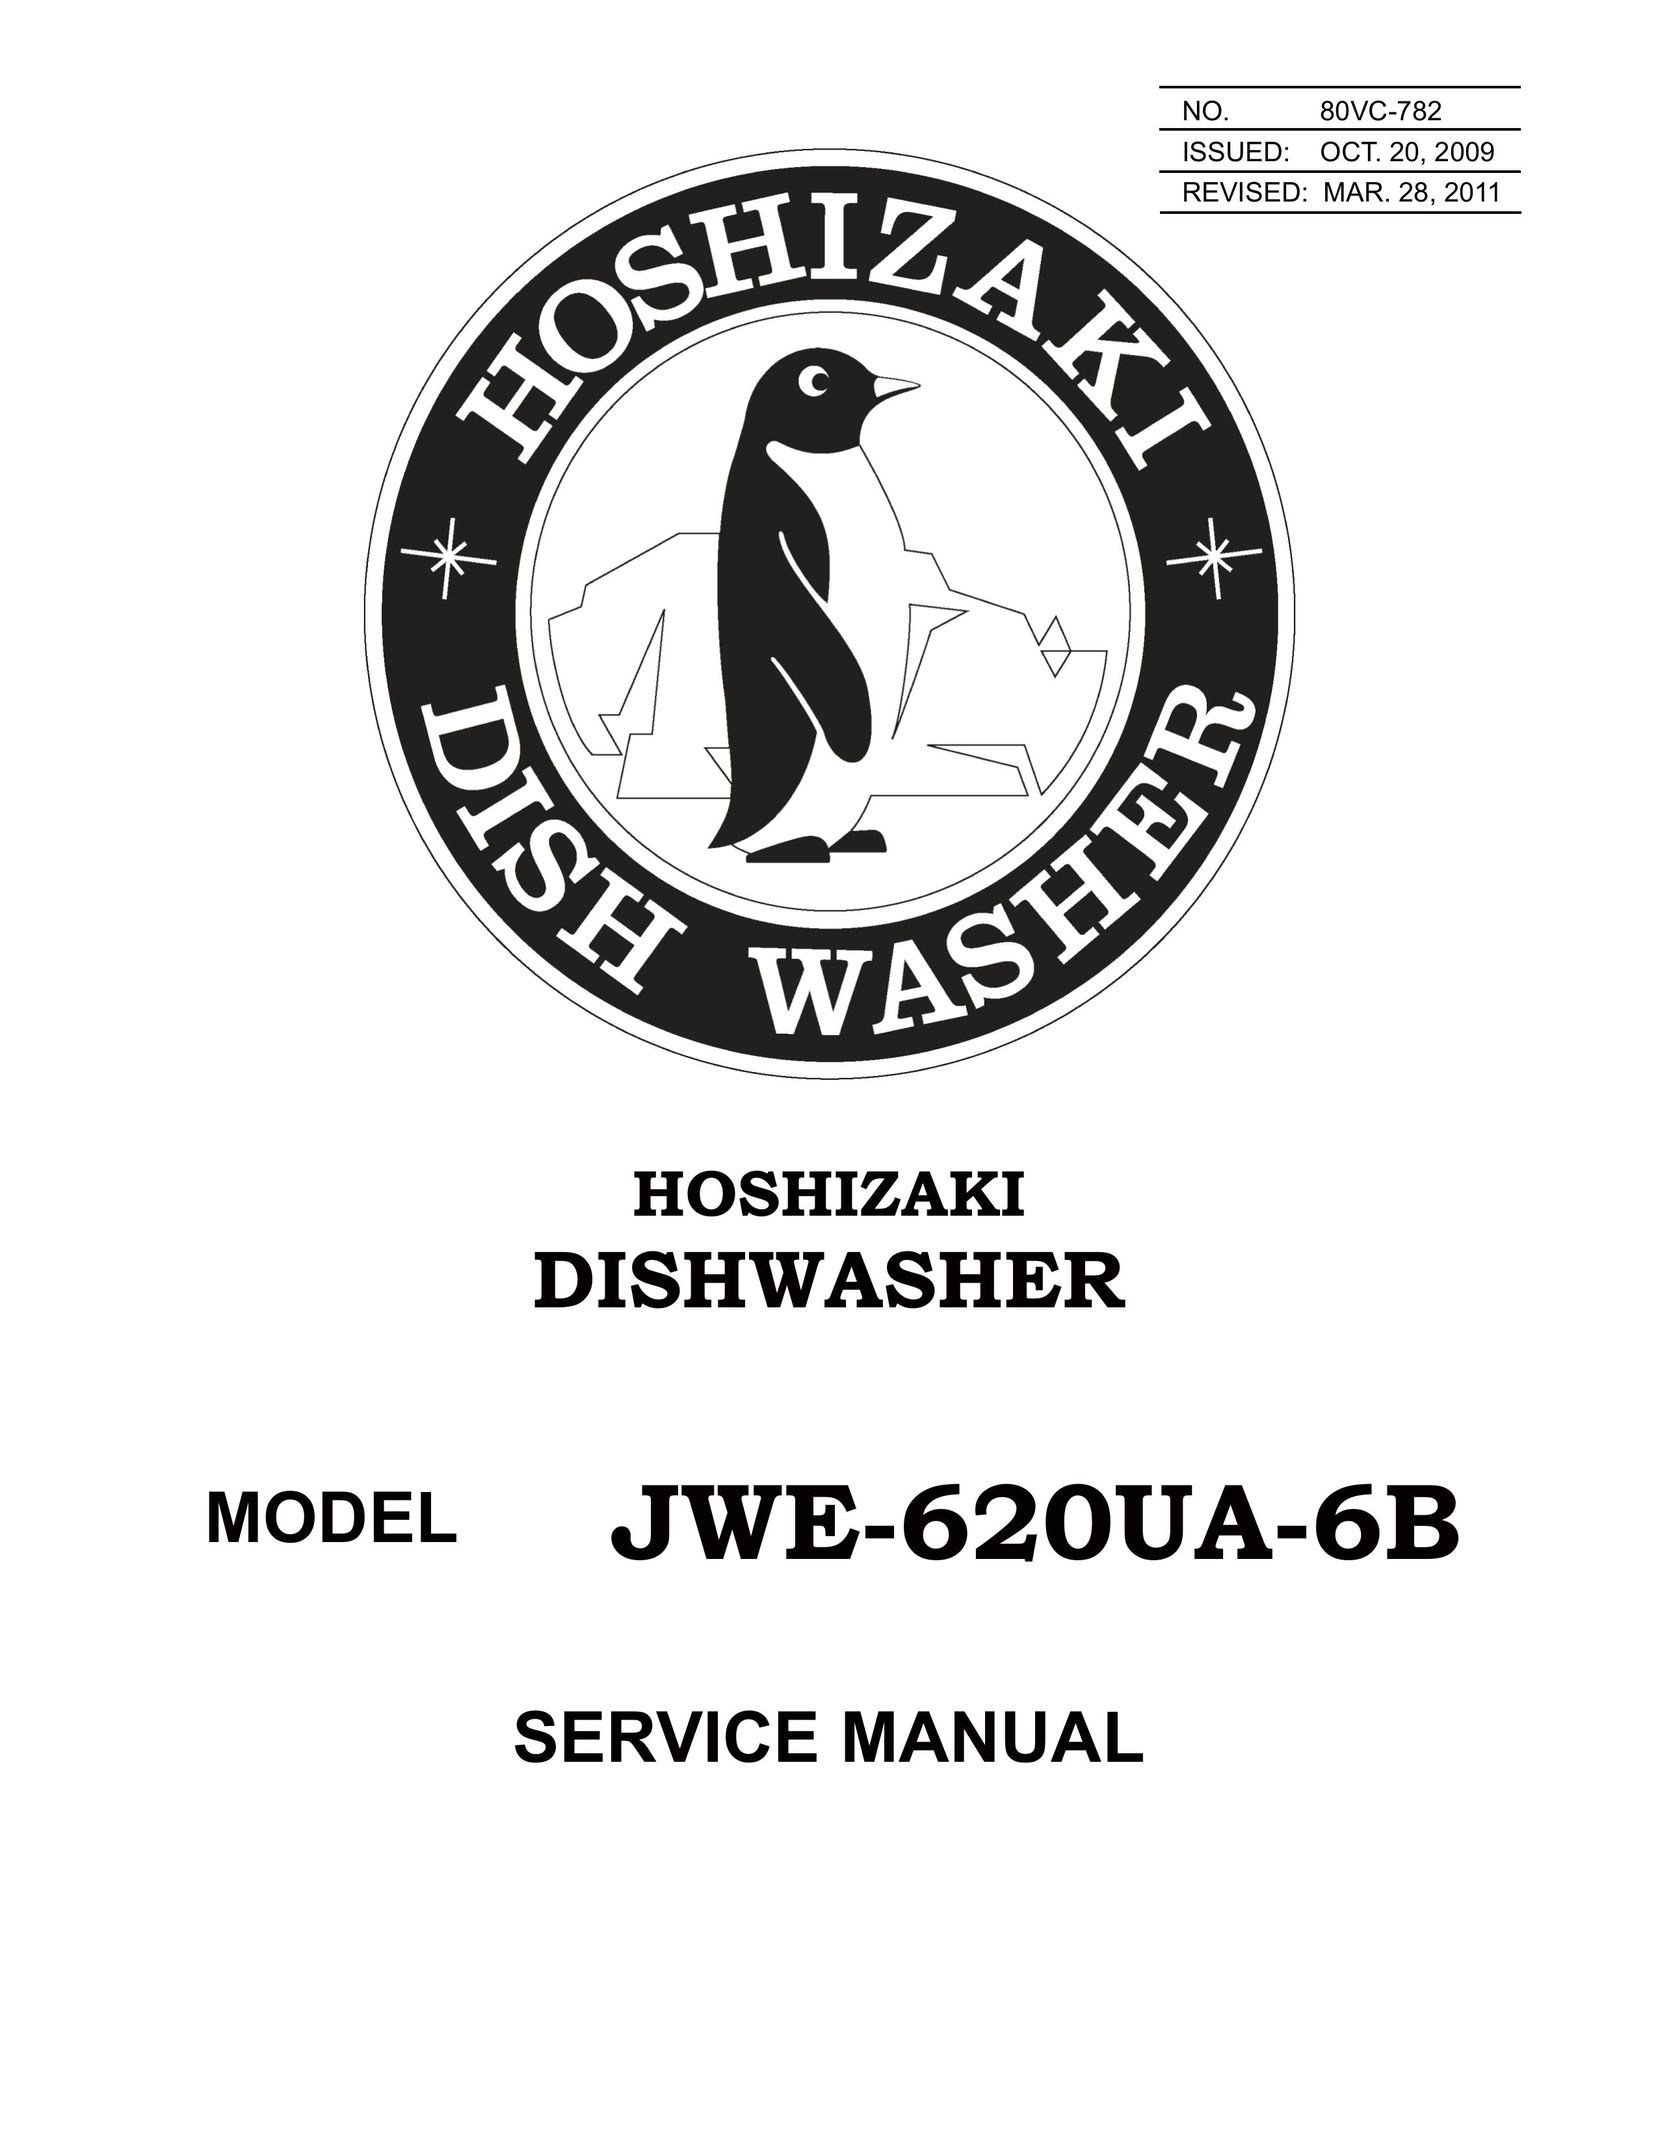 Hoshizaki JWE-620UA-6B Dishwasher User Manual